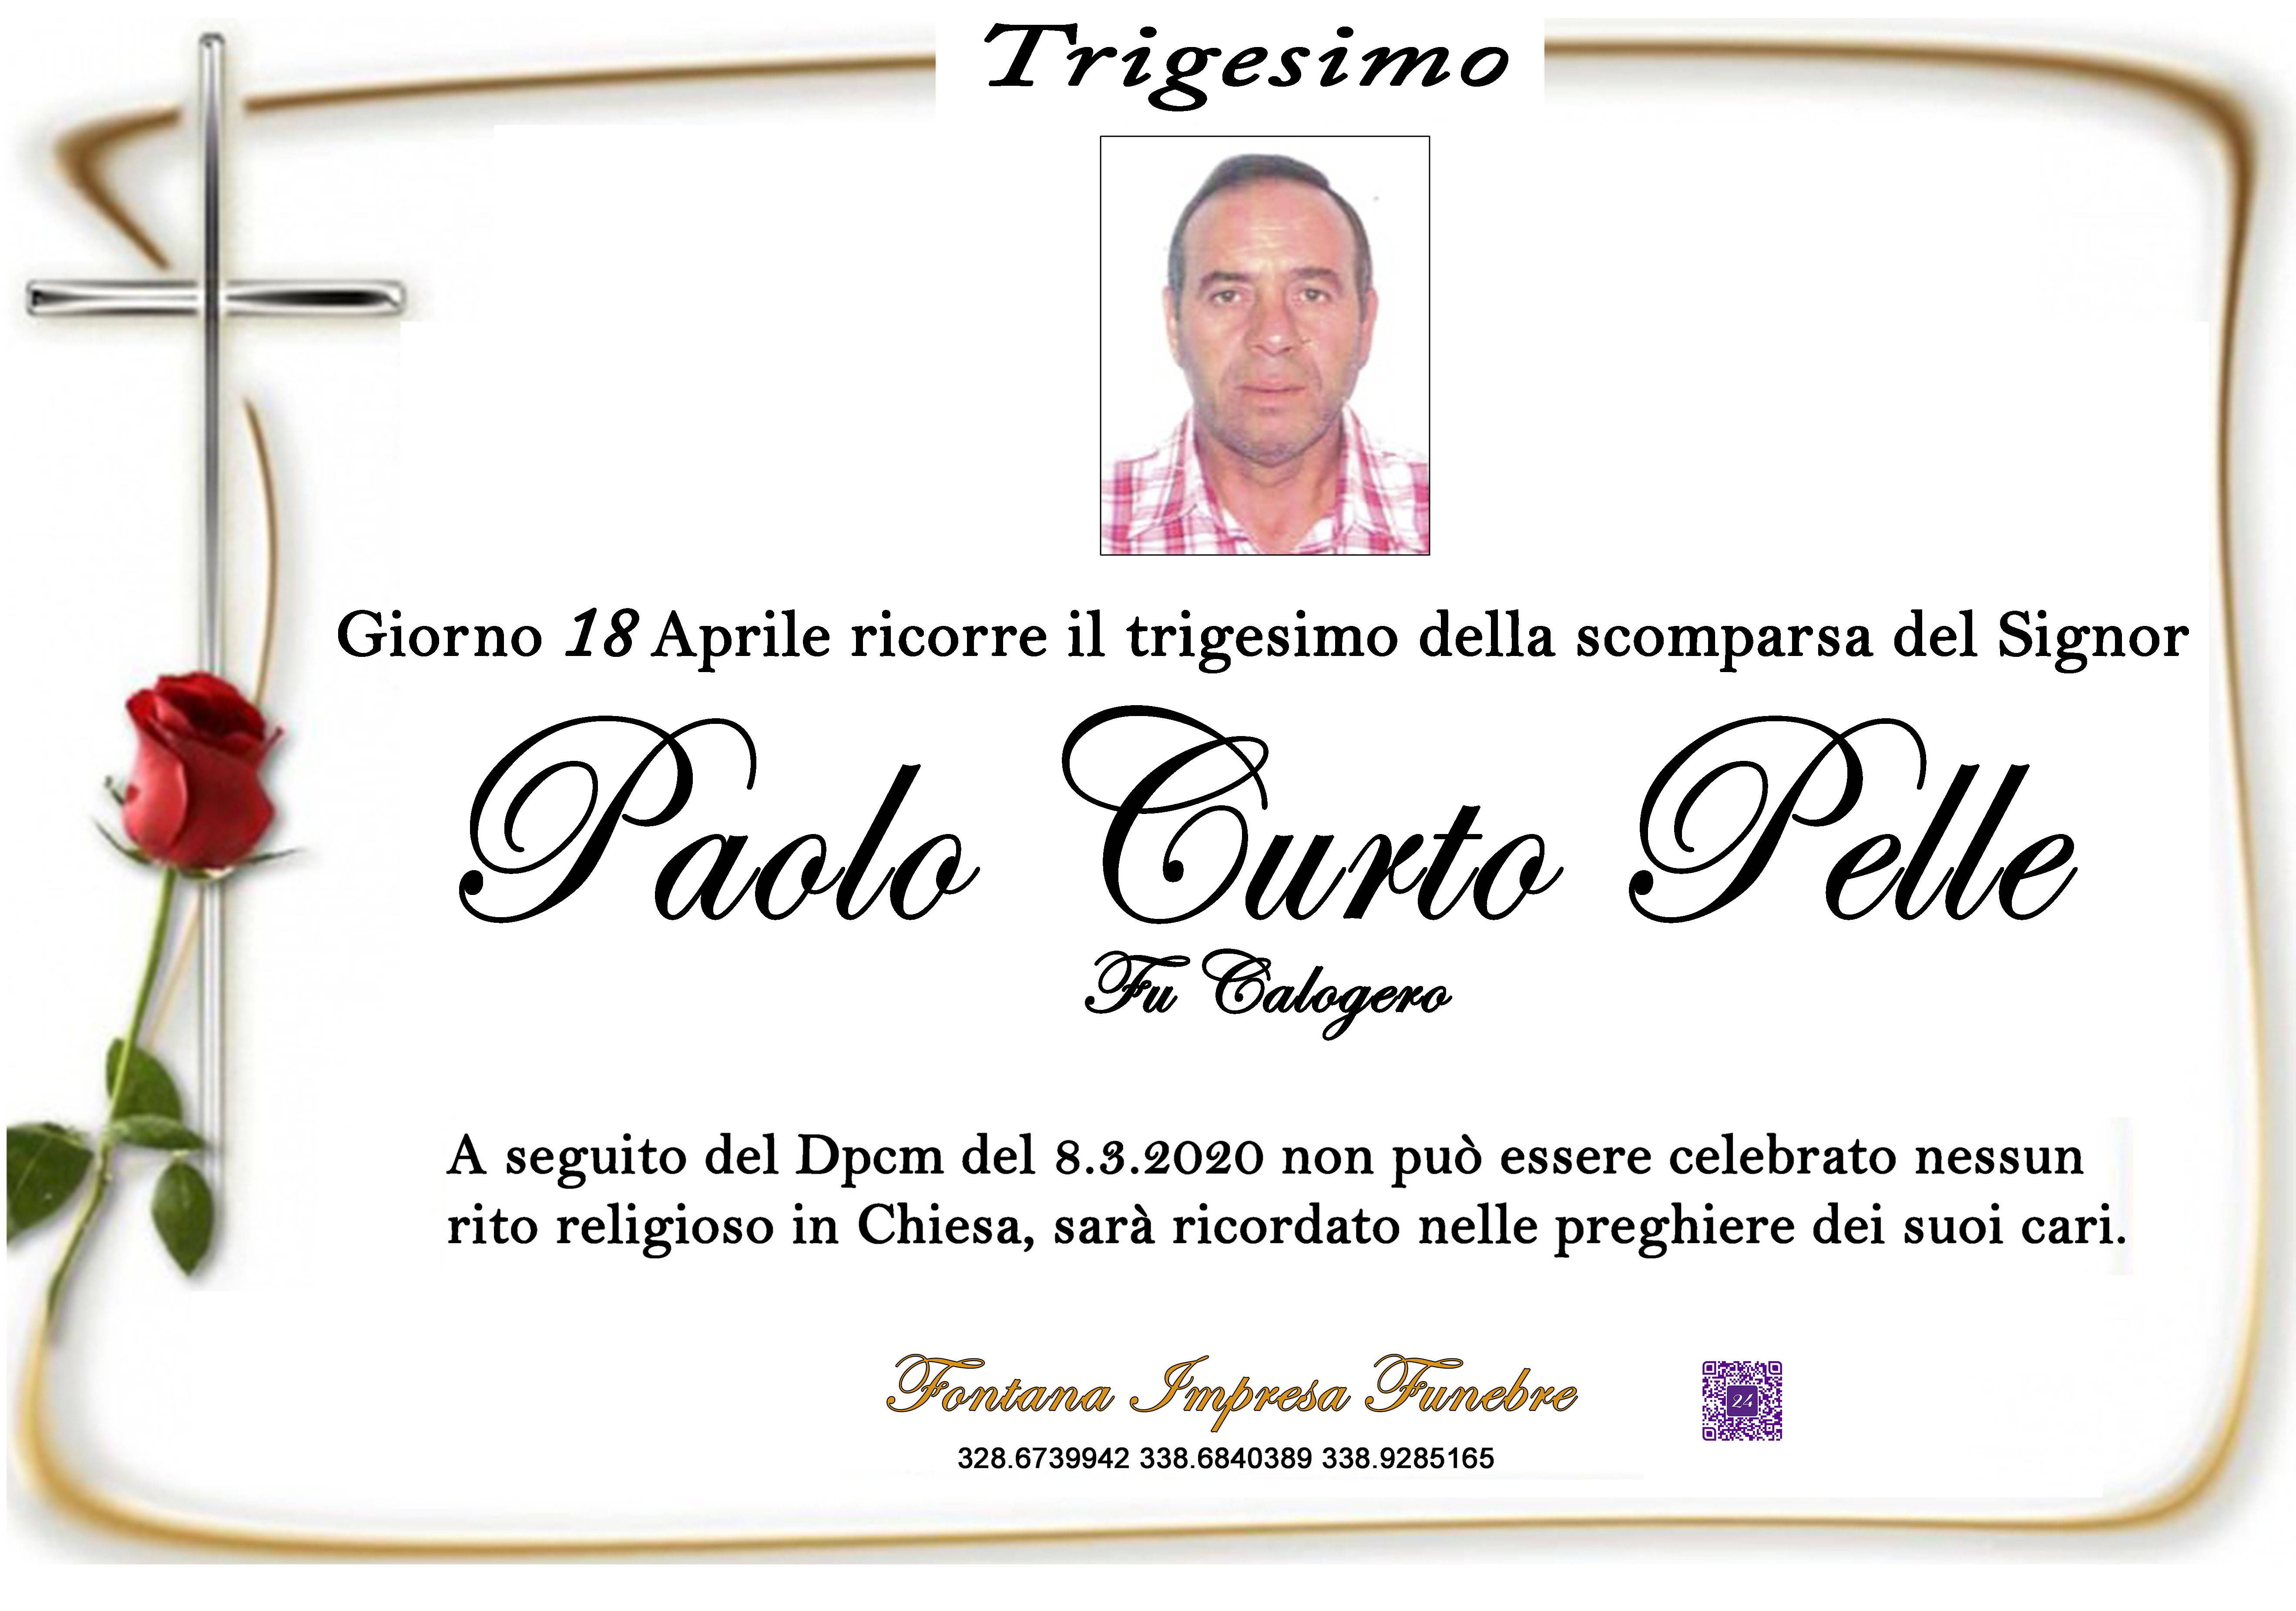 Paolo Curto Pelle